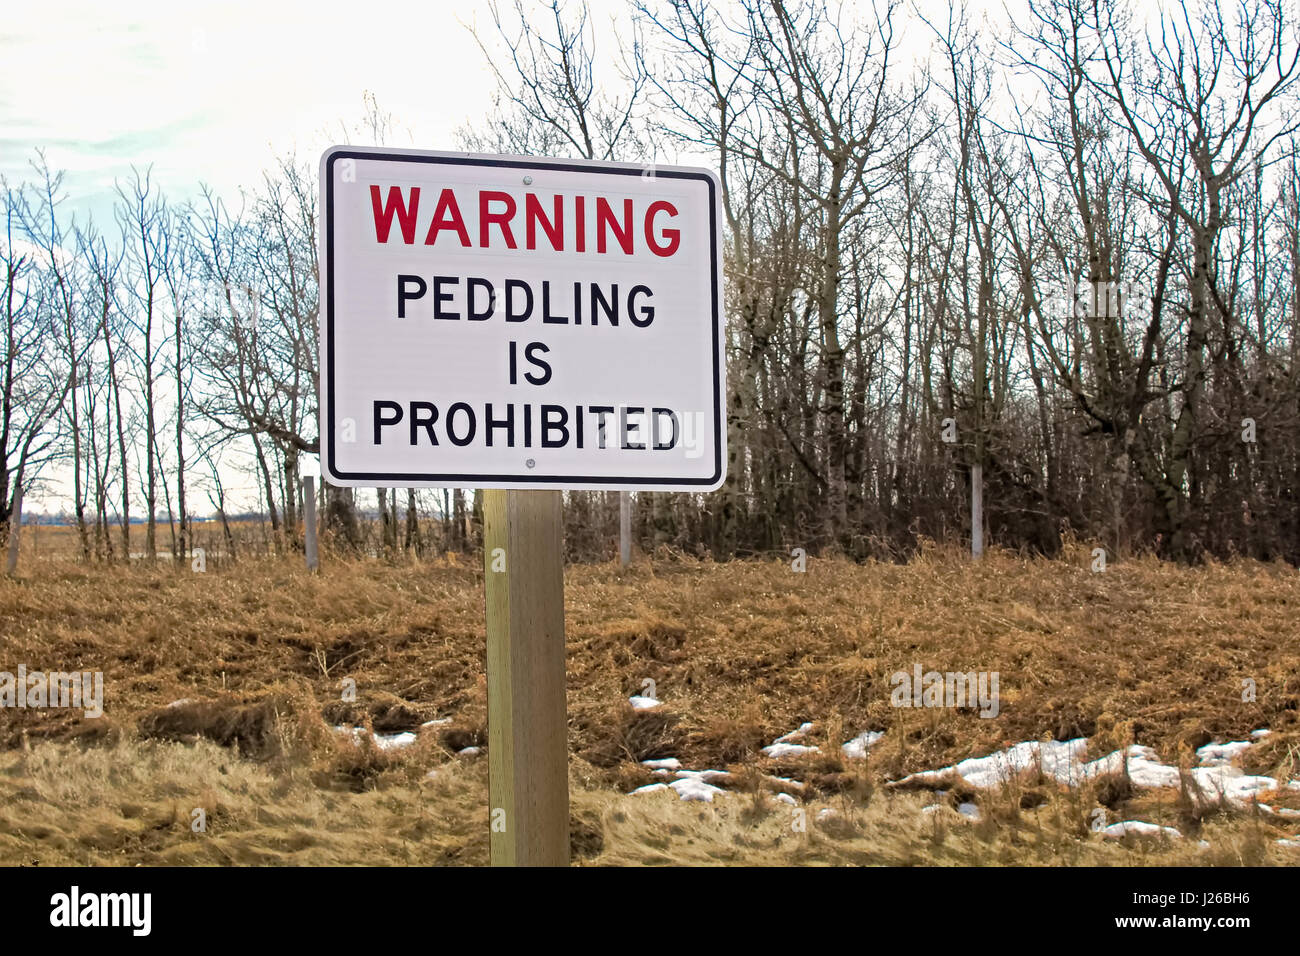 Warning peddling is prohibited sign. Stock Photo